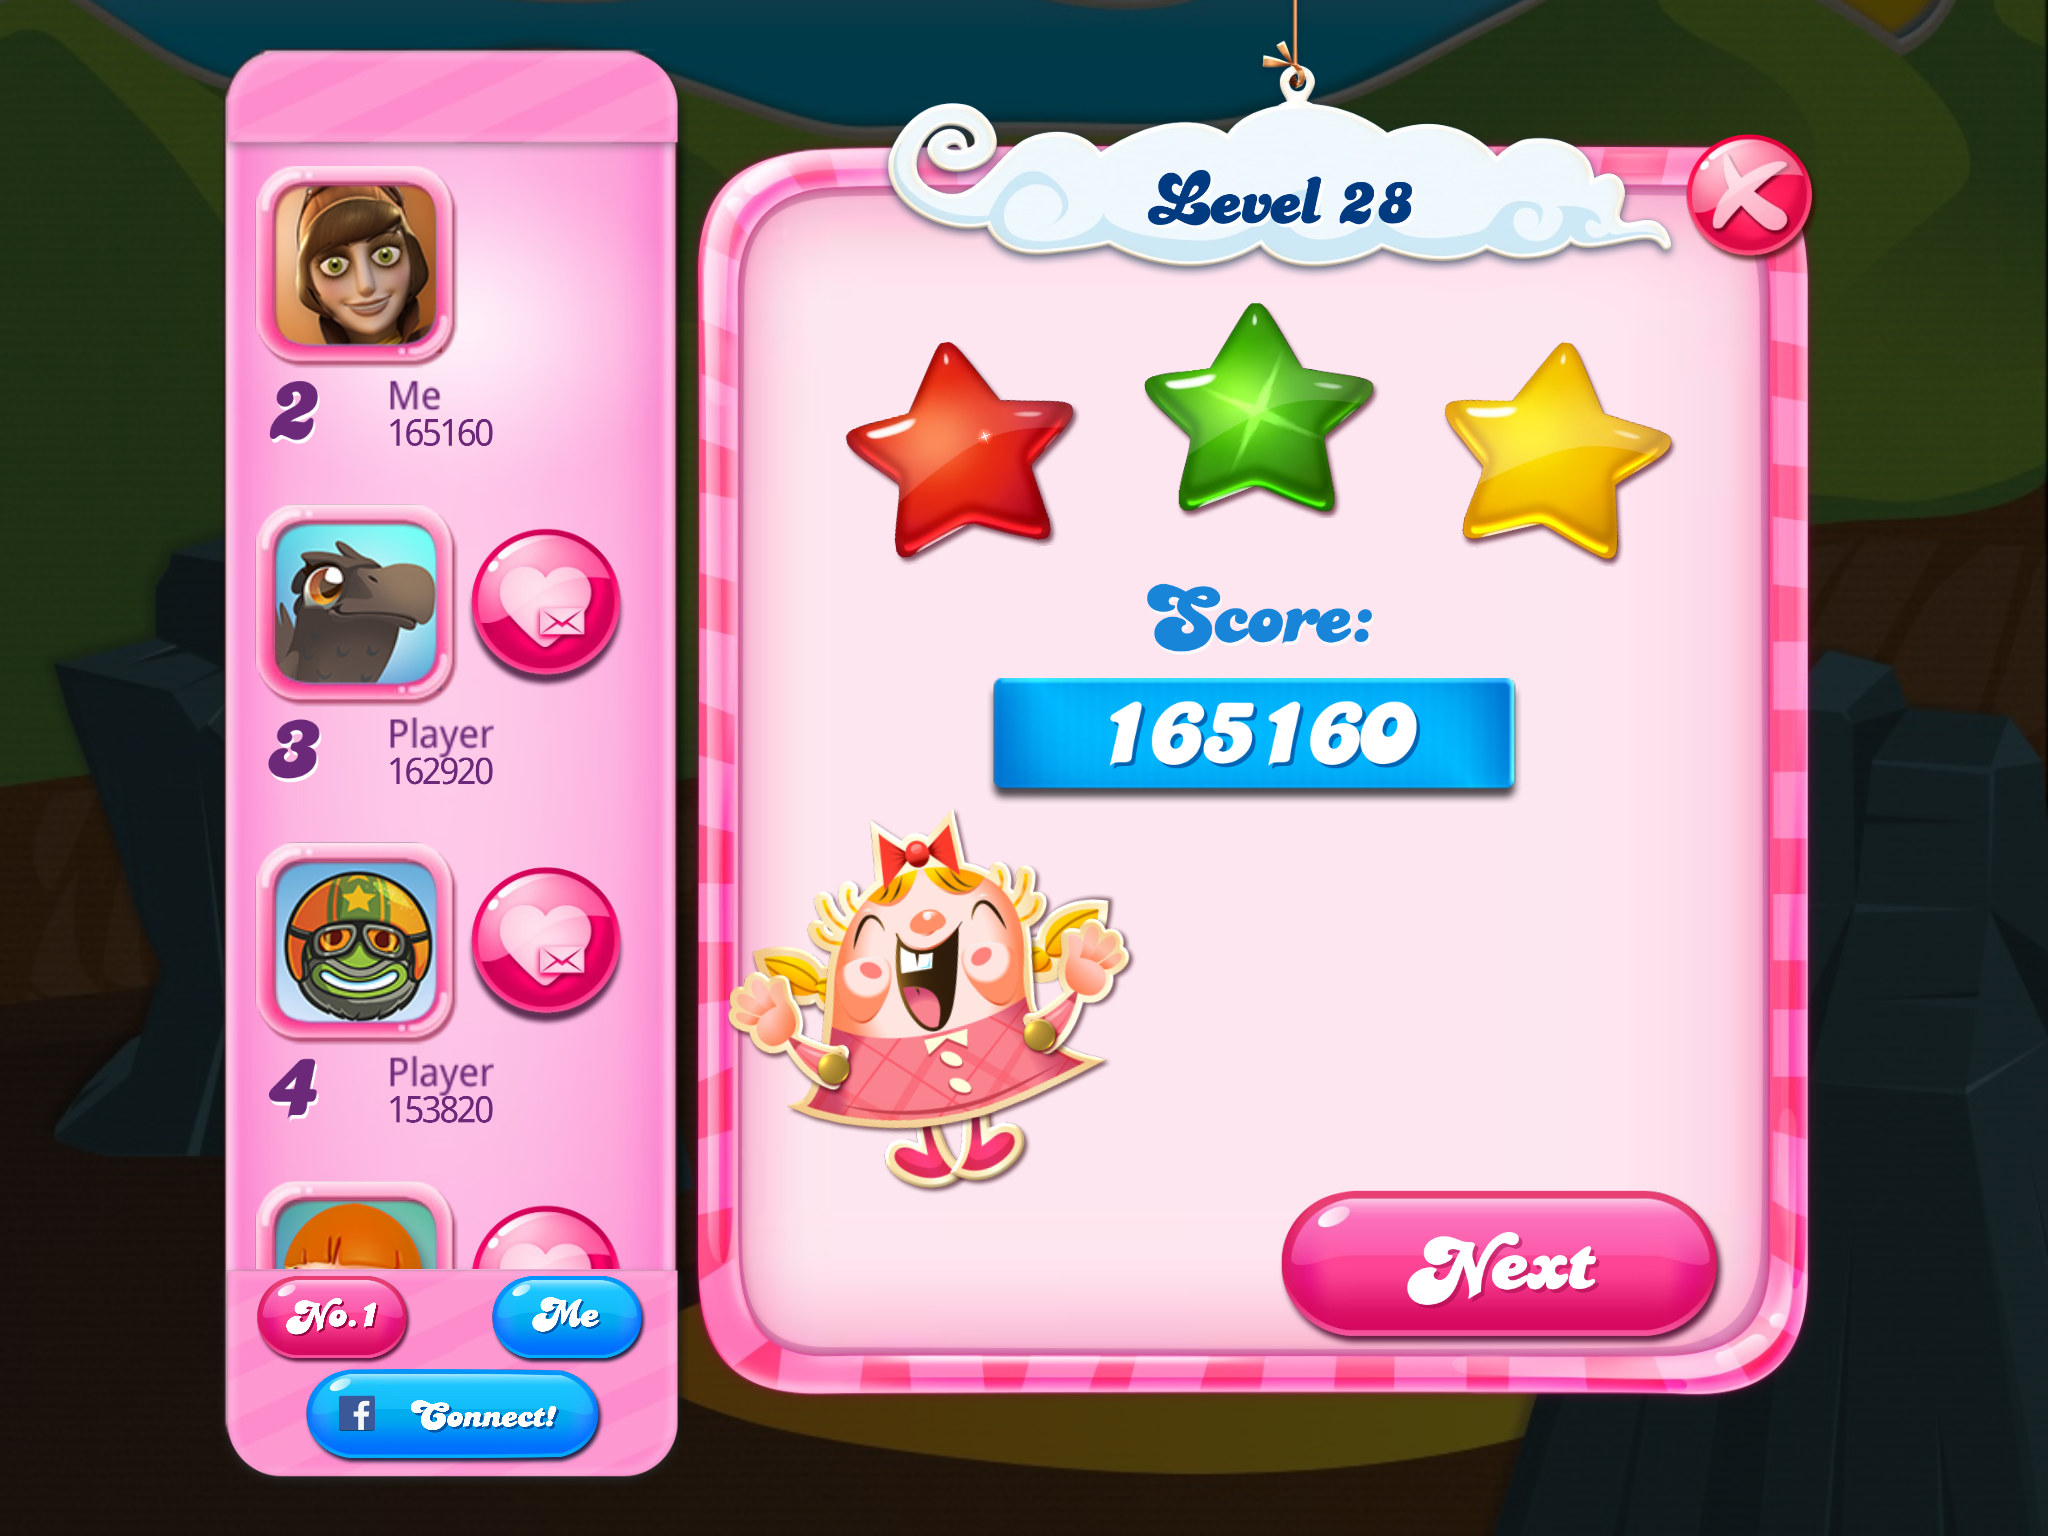 Candy Crush Saga: Level 028 165,160 points